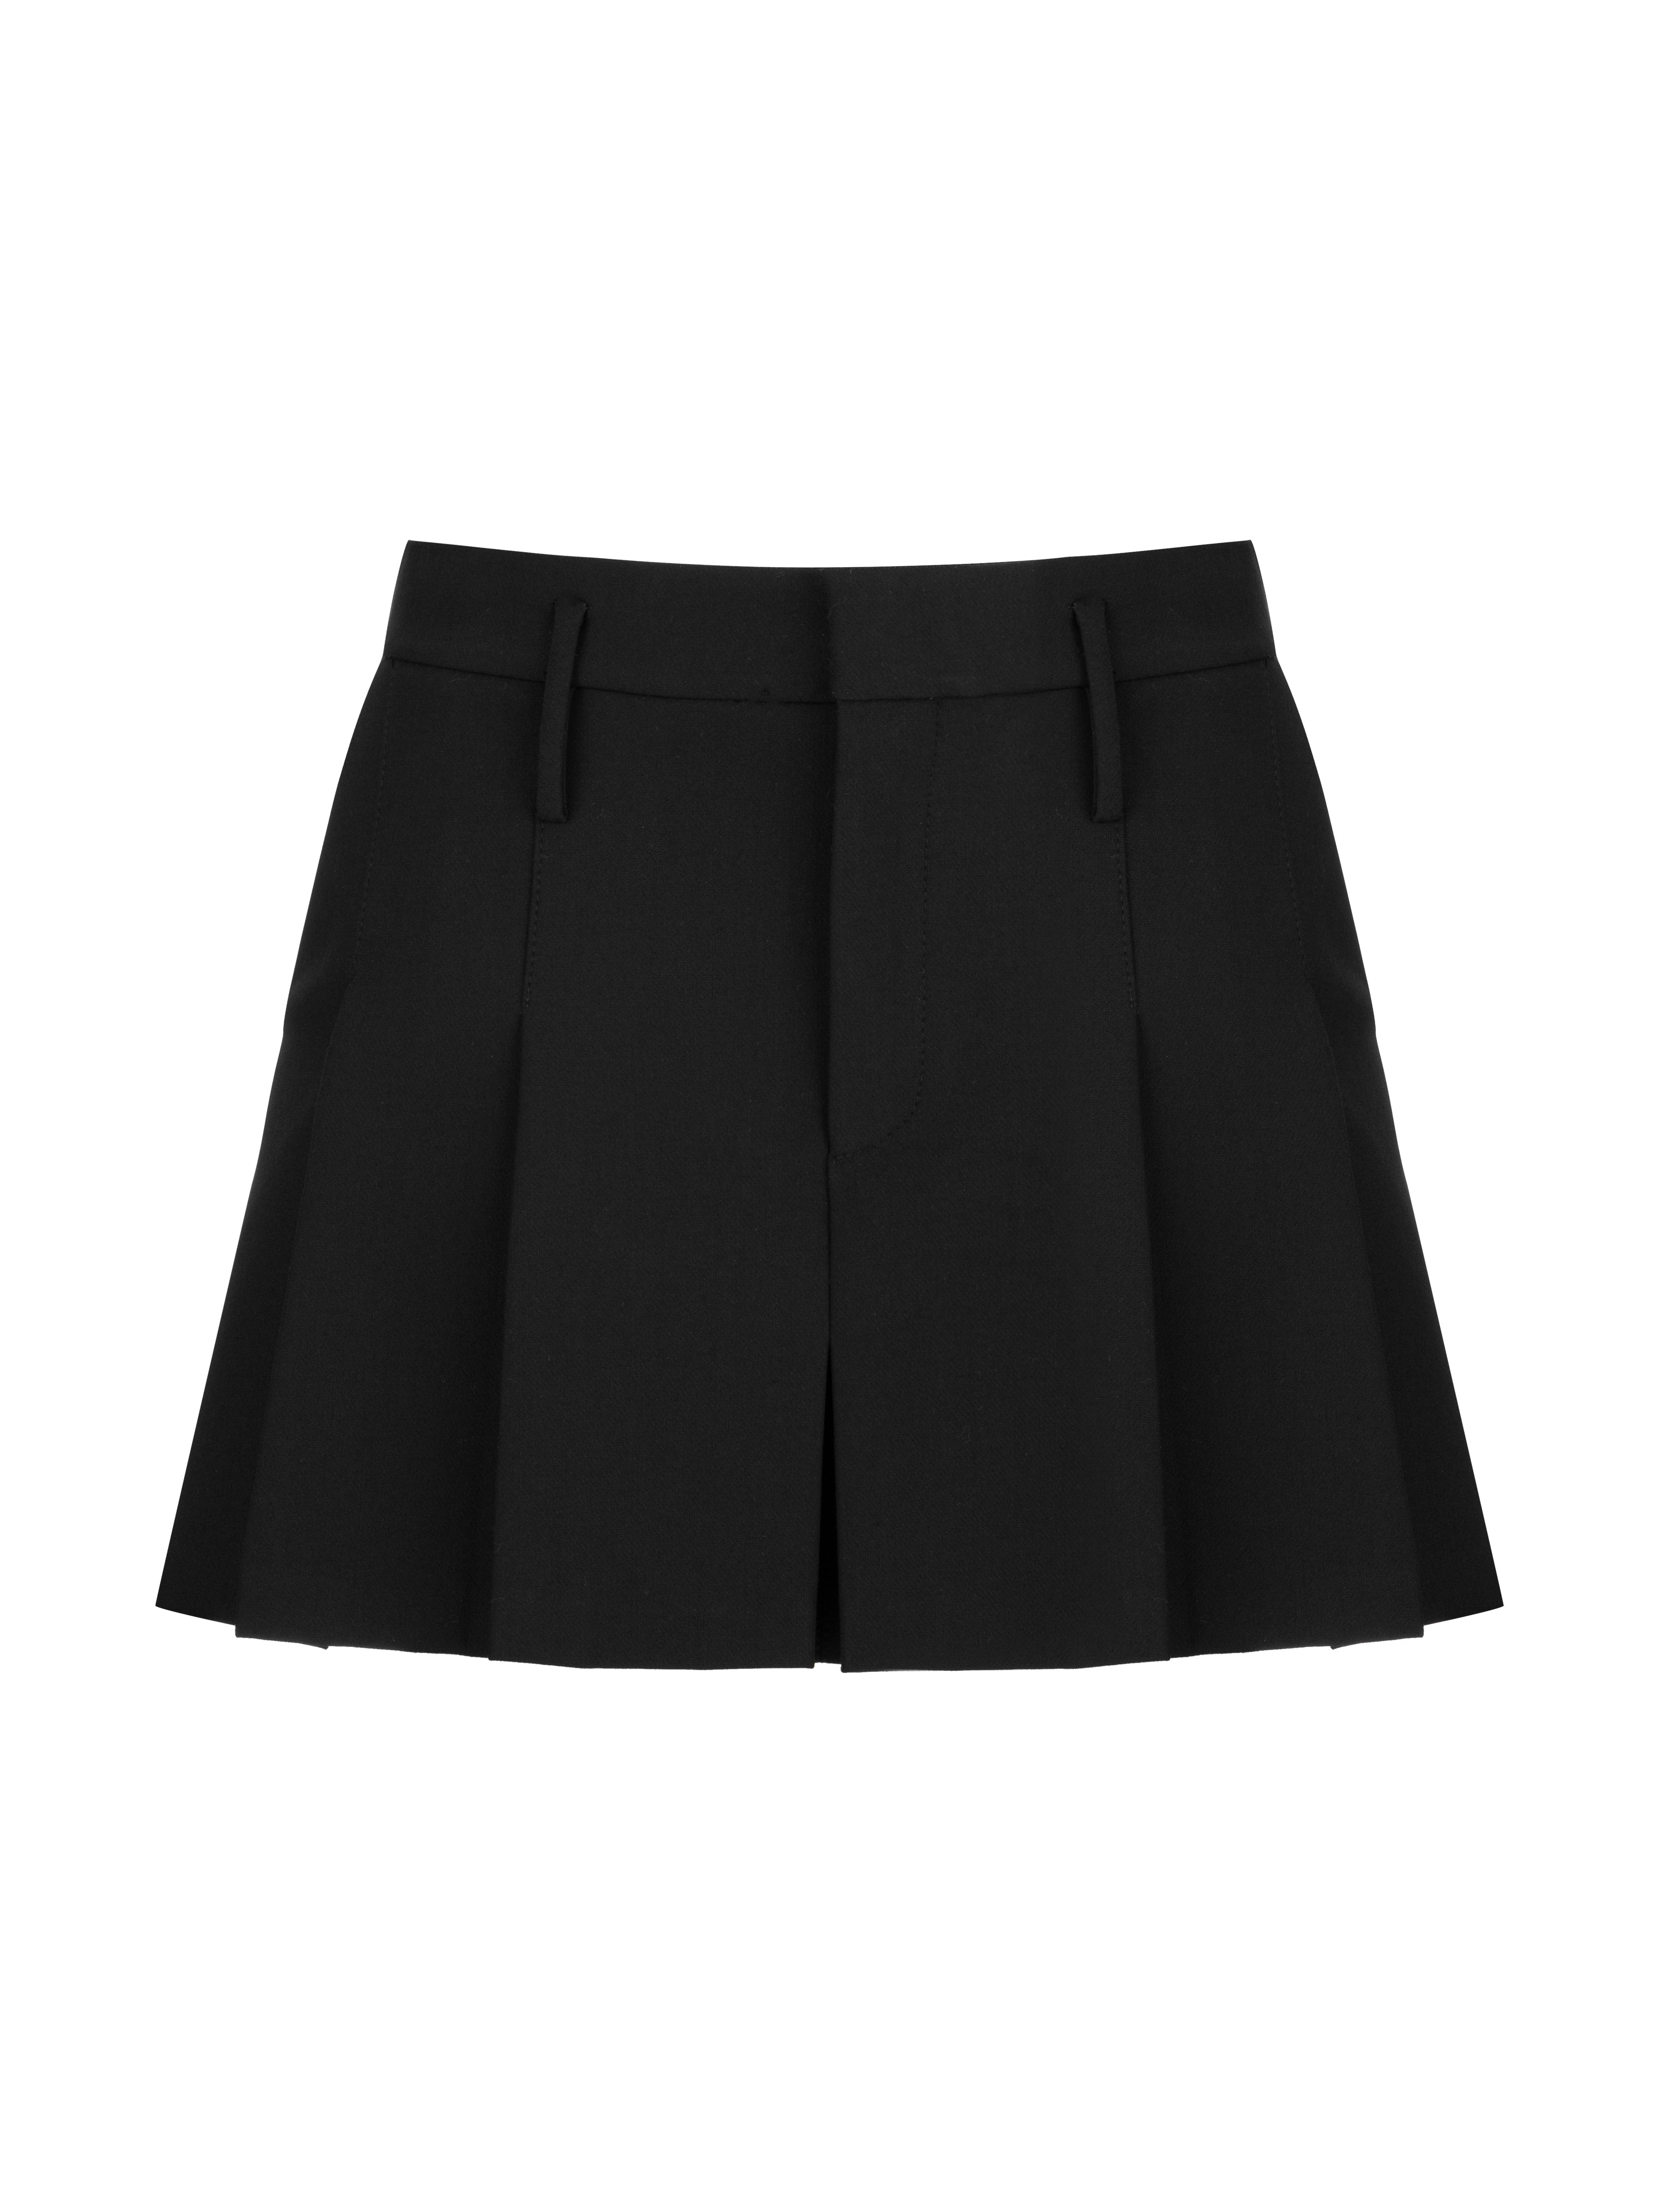 Shop Nocturne Women's Black Pleated Mini Skirt